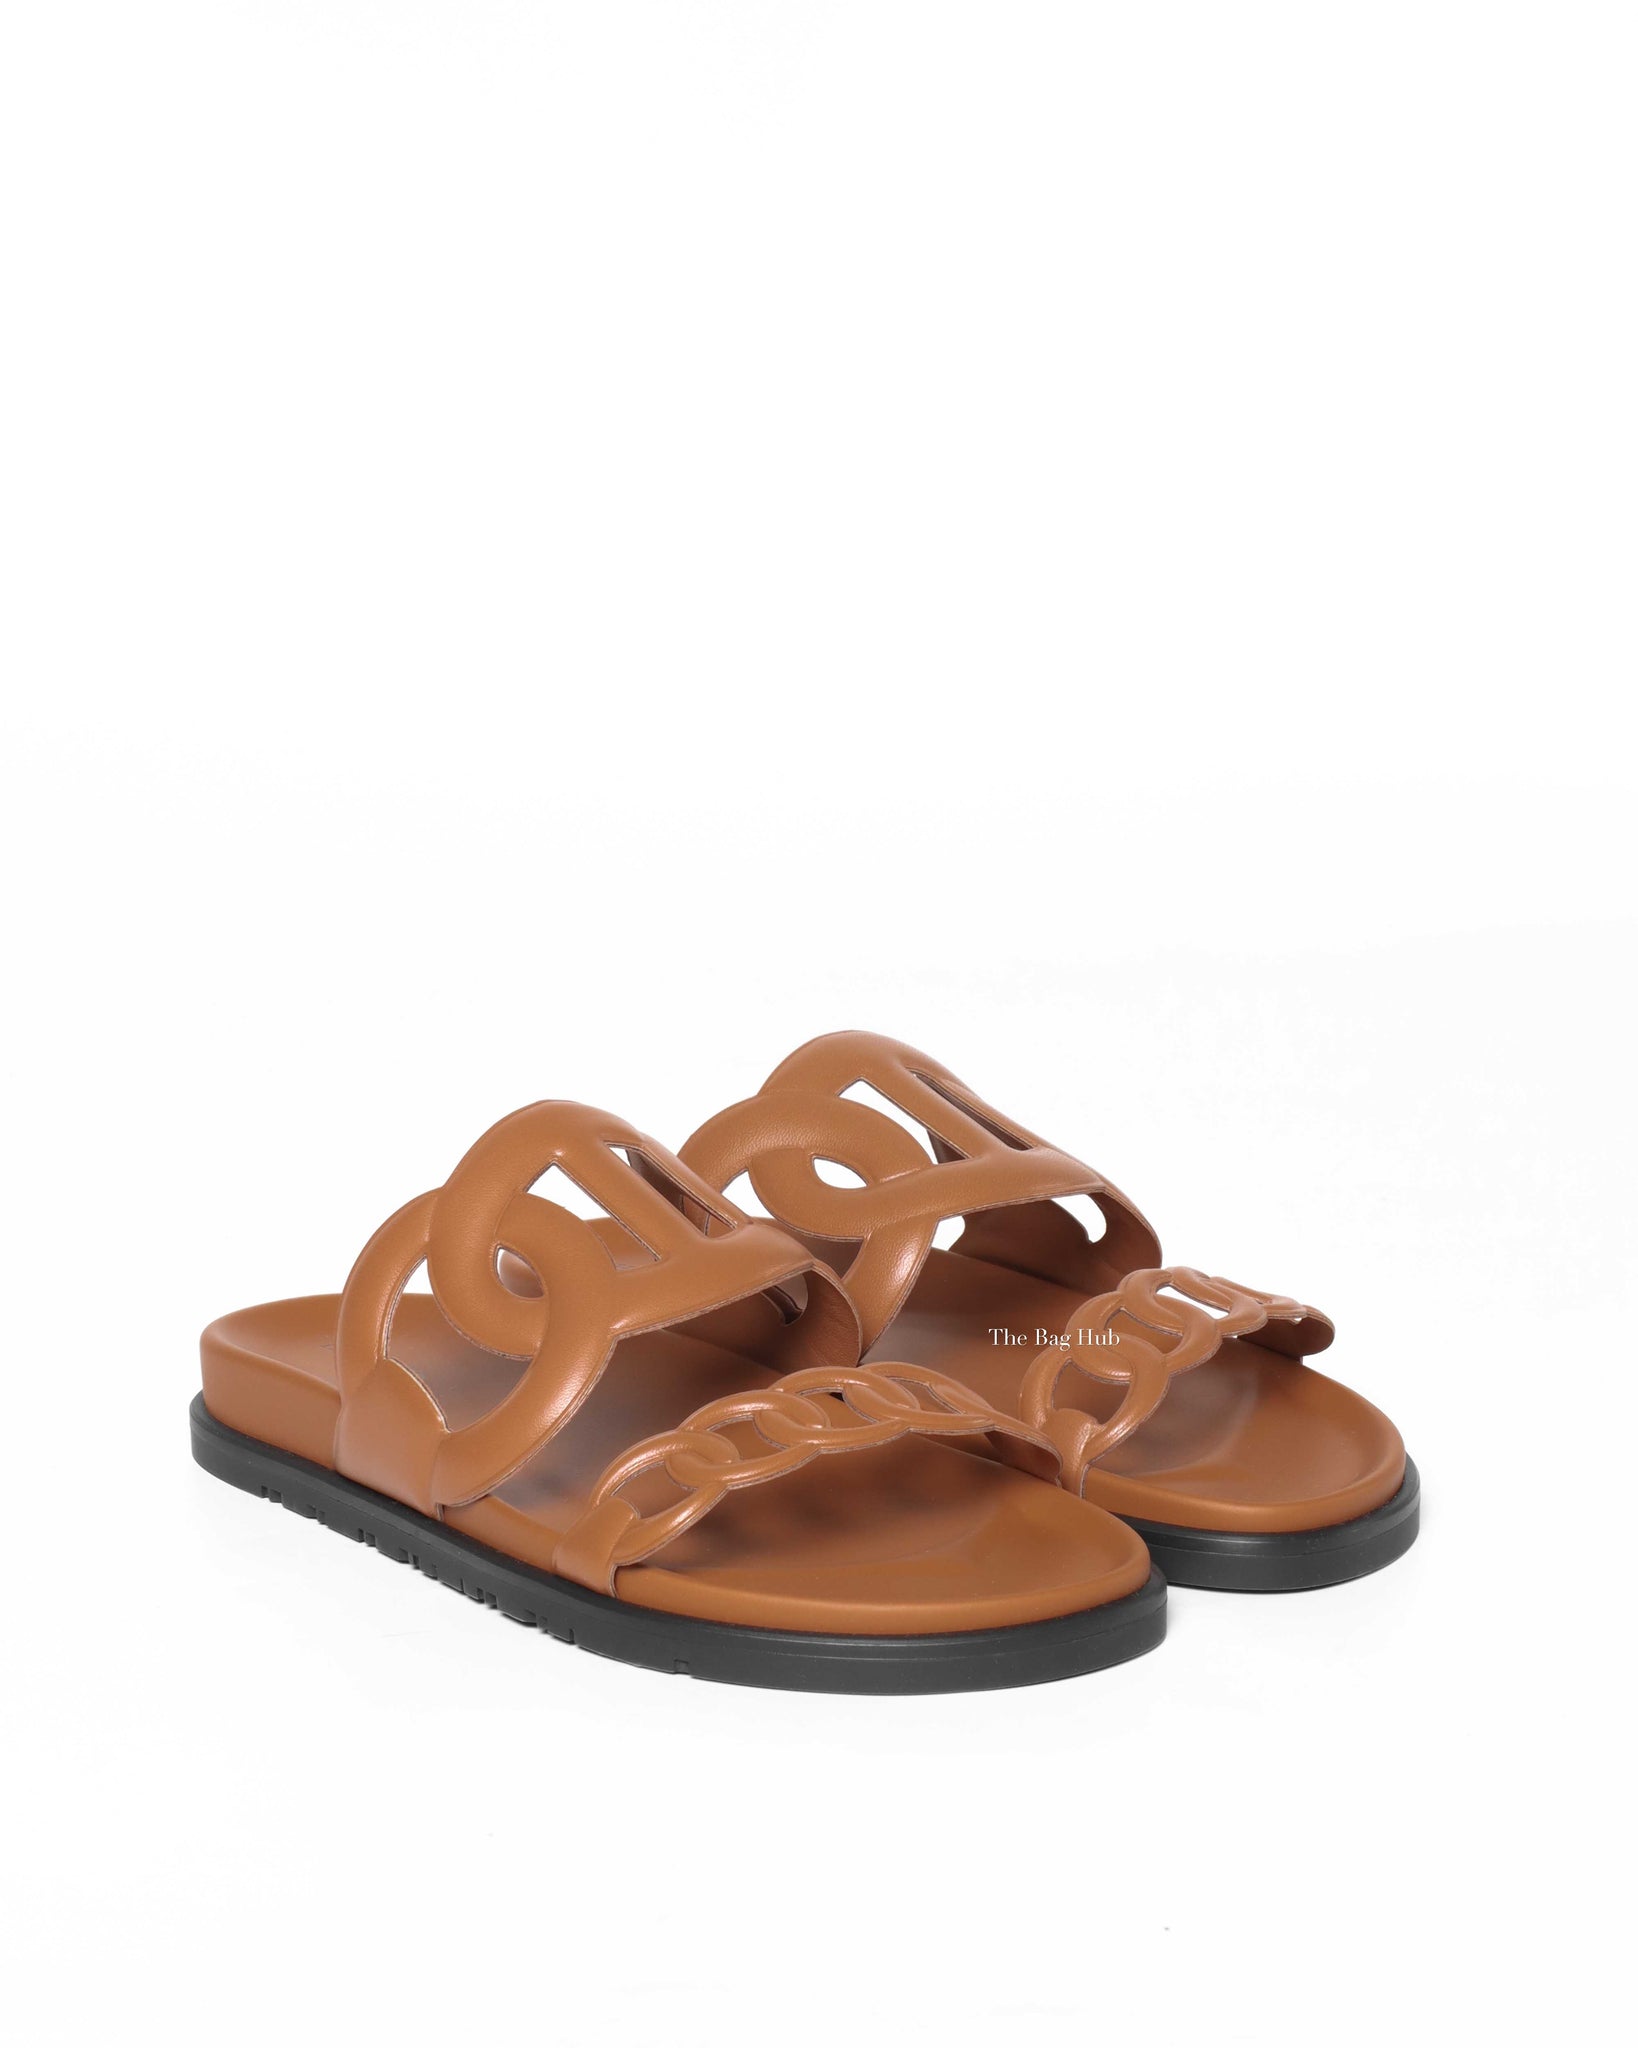 Hermes Naturel Leather Extra Sandals Size 39.5-2